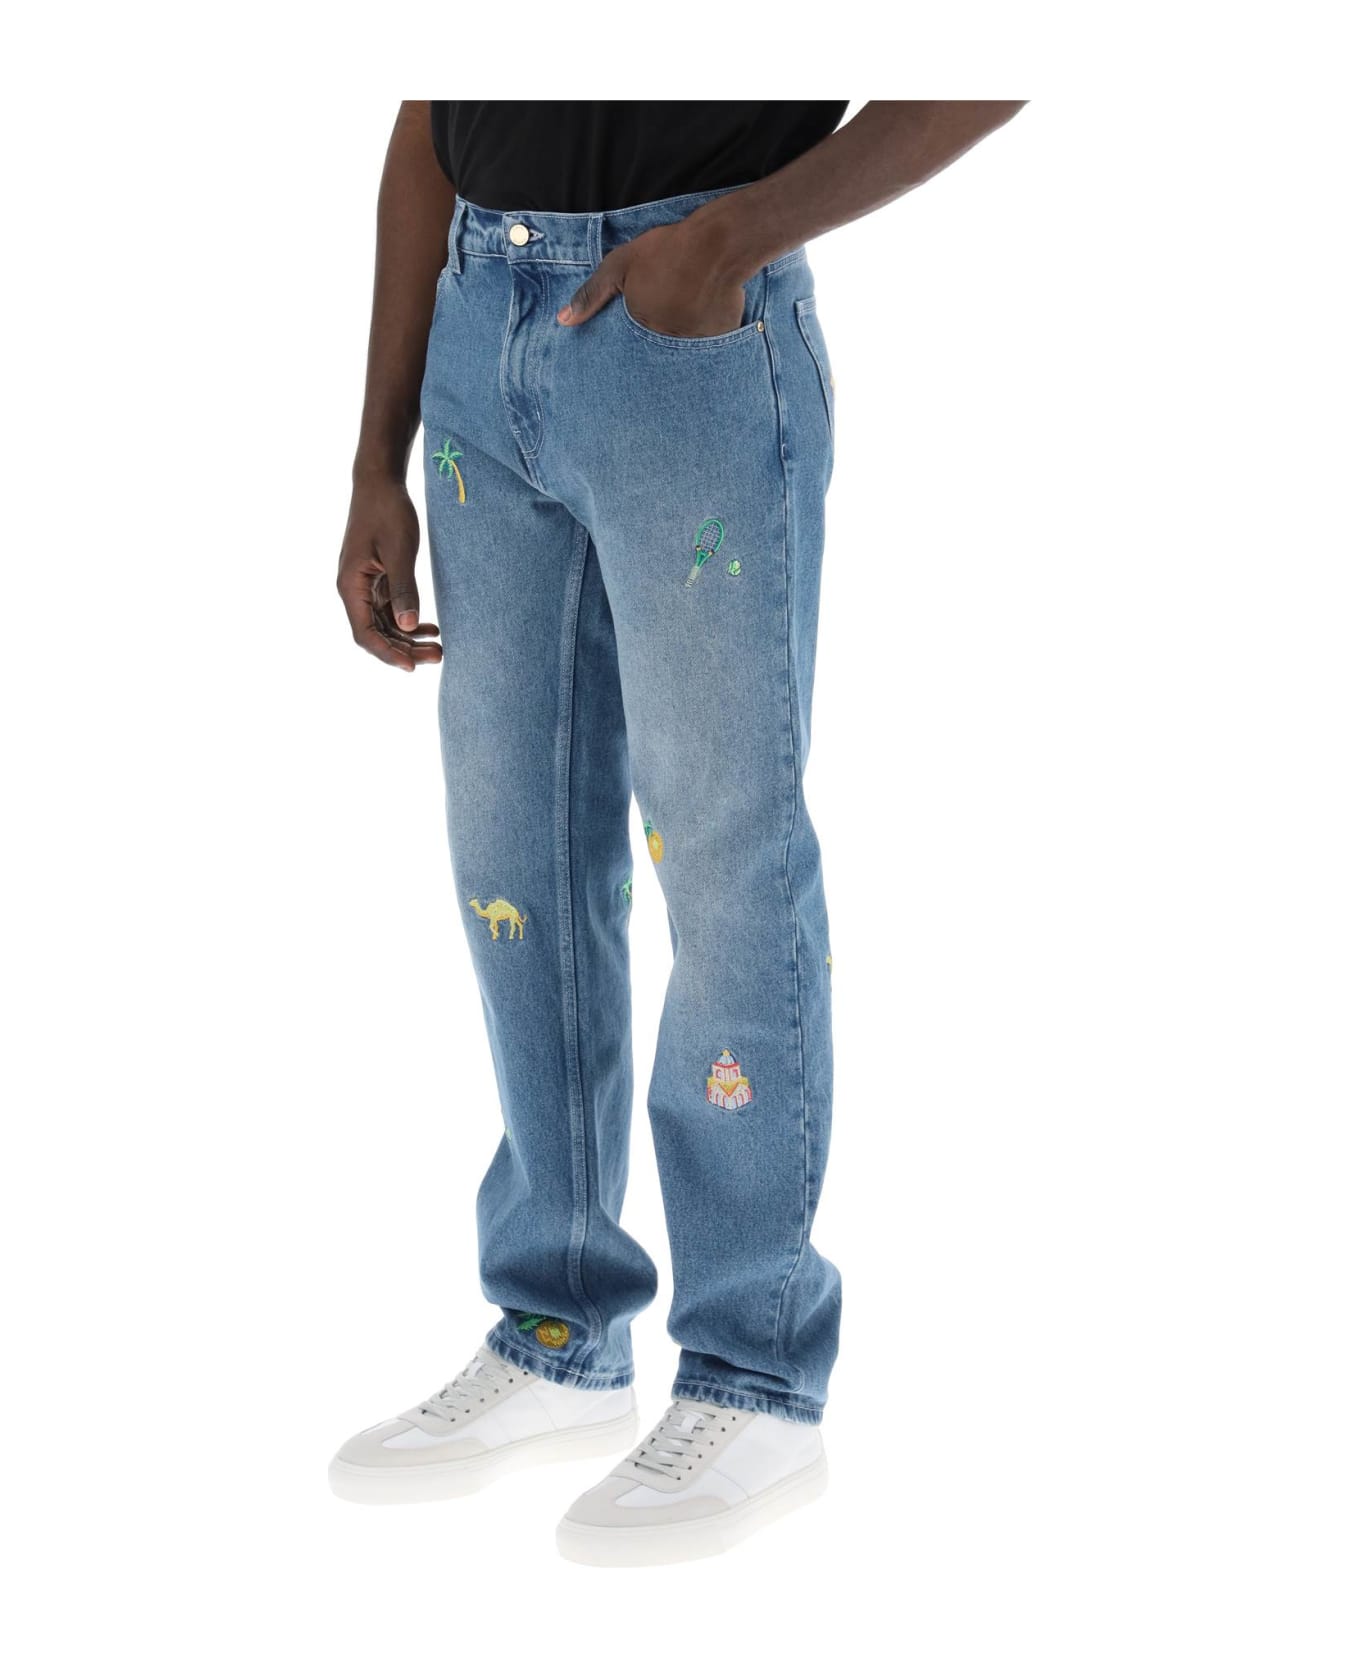 Casablanca Embroidered Straight Jeans - STONE WASH (Light blue) デニム